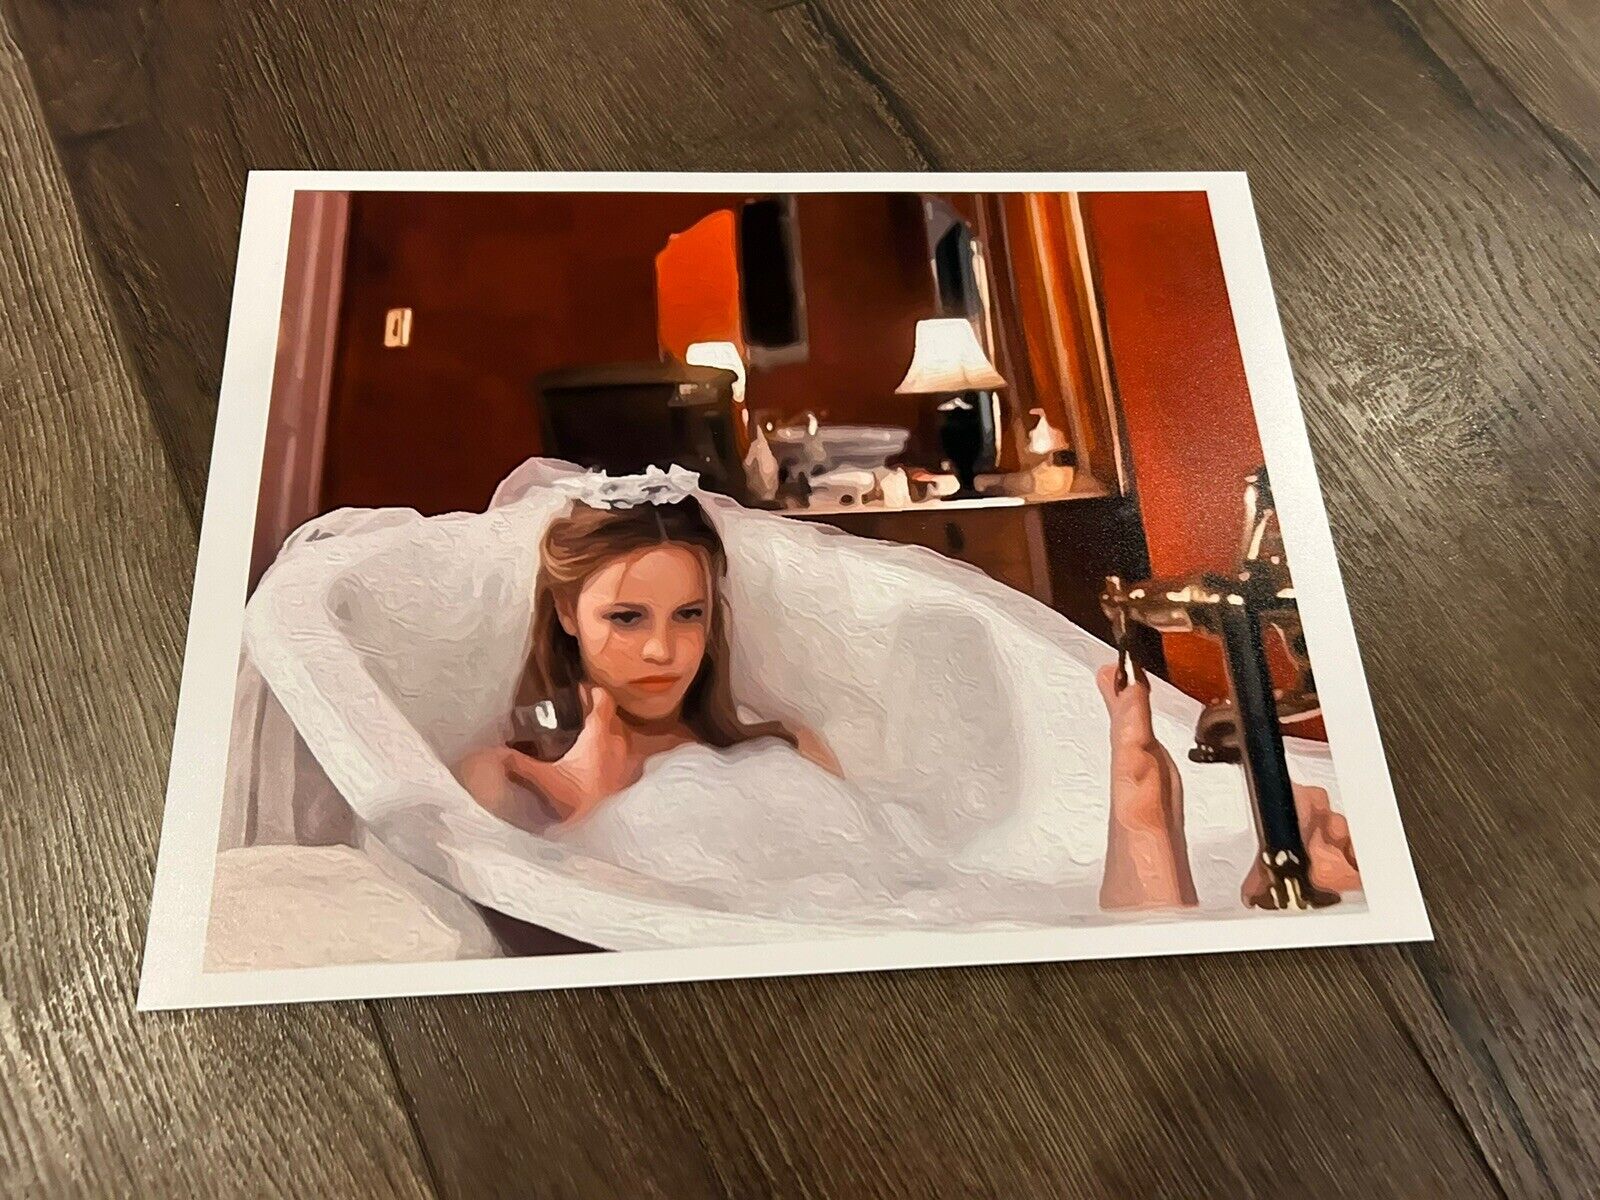 THE NOTEBOOK RACHEL MCADAMS Art Print Photo 11x14 TUB Bathroom Wedding Dress